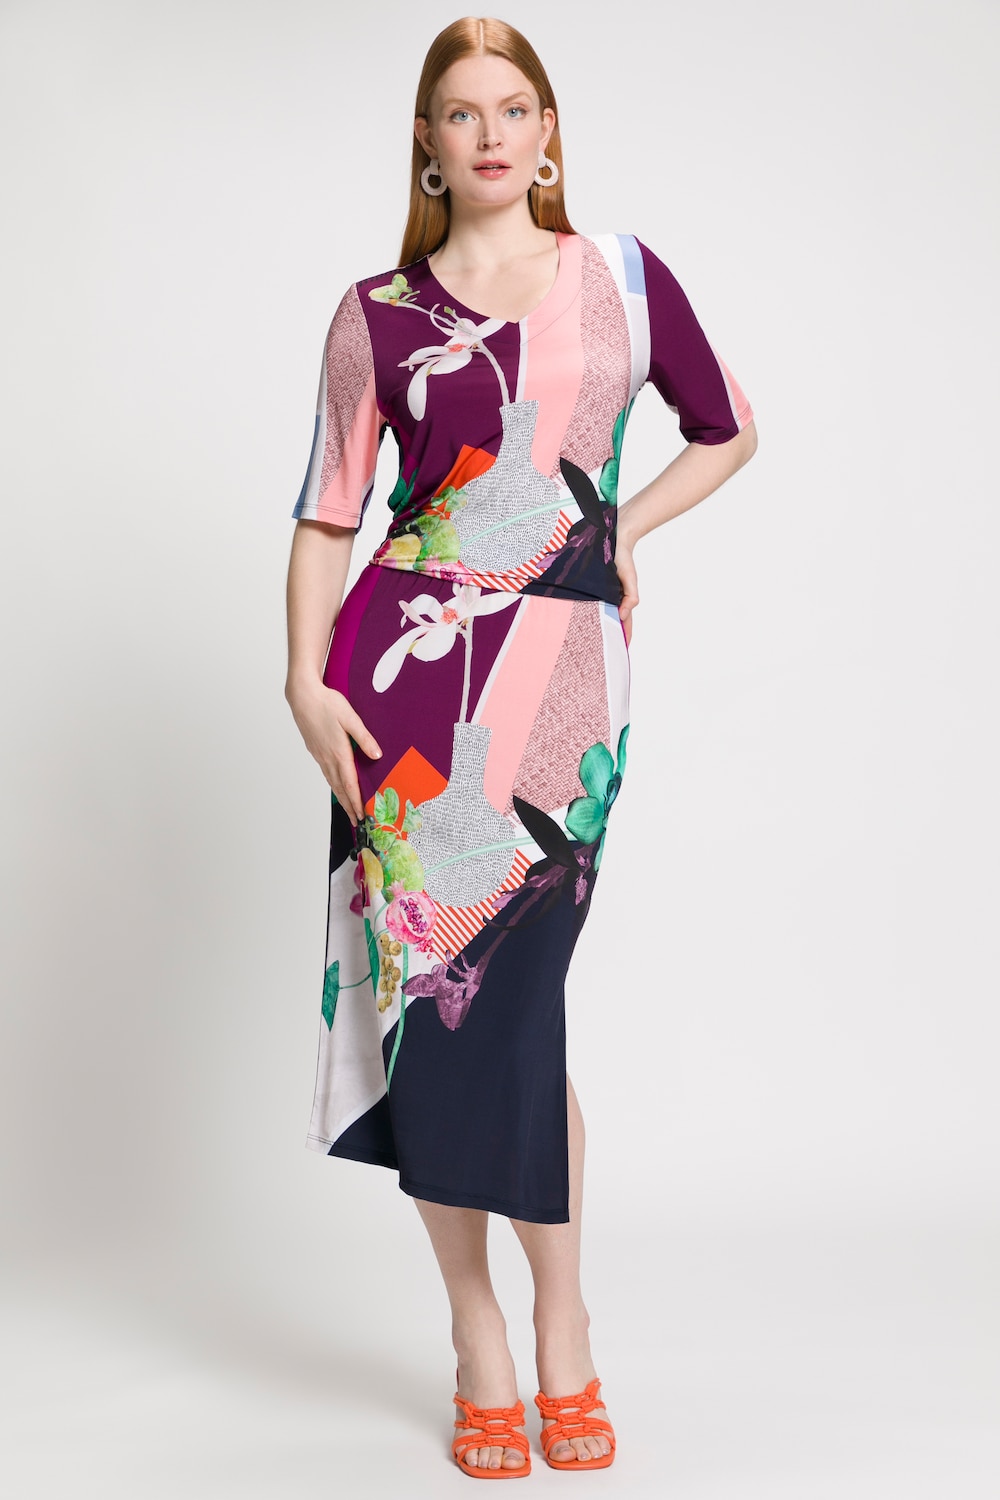 Plus Size Floral Patch Elastic Waist Slinky Stretch Knit Skirt, Woman, pink, size: 16/18, viscose, Ulla Popken